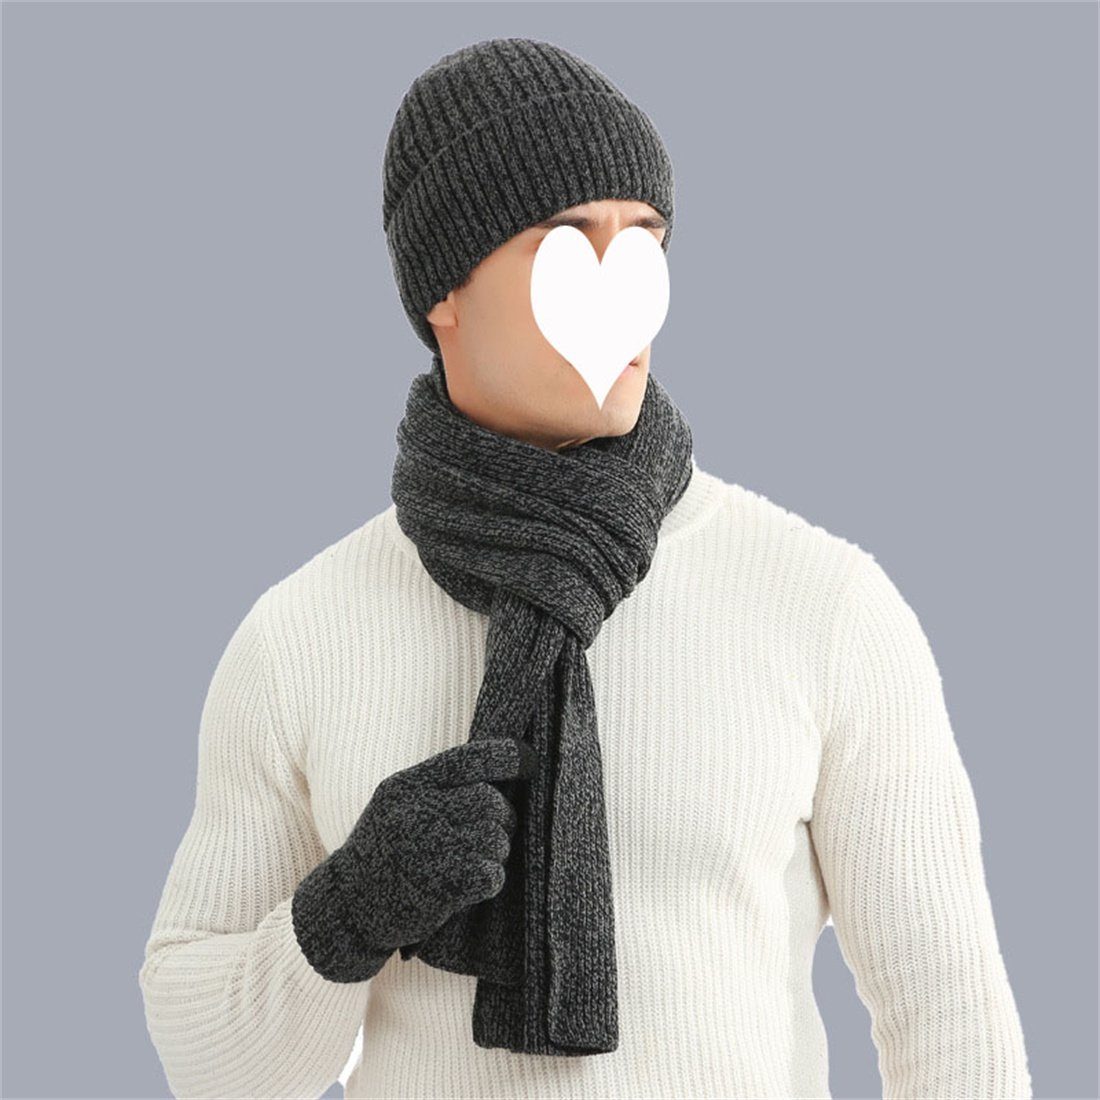 DÖRÖY Strickmütze Wintermütze aus verdickter Wolle,Warmer Mützenschal Handschuhe 3er Set dunkelgrau | Strickmützen